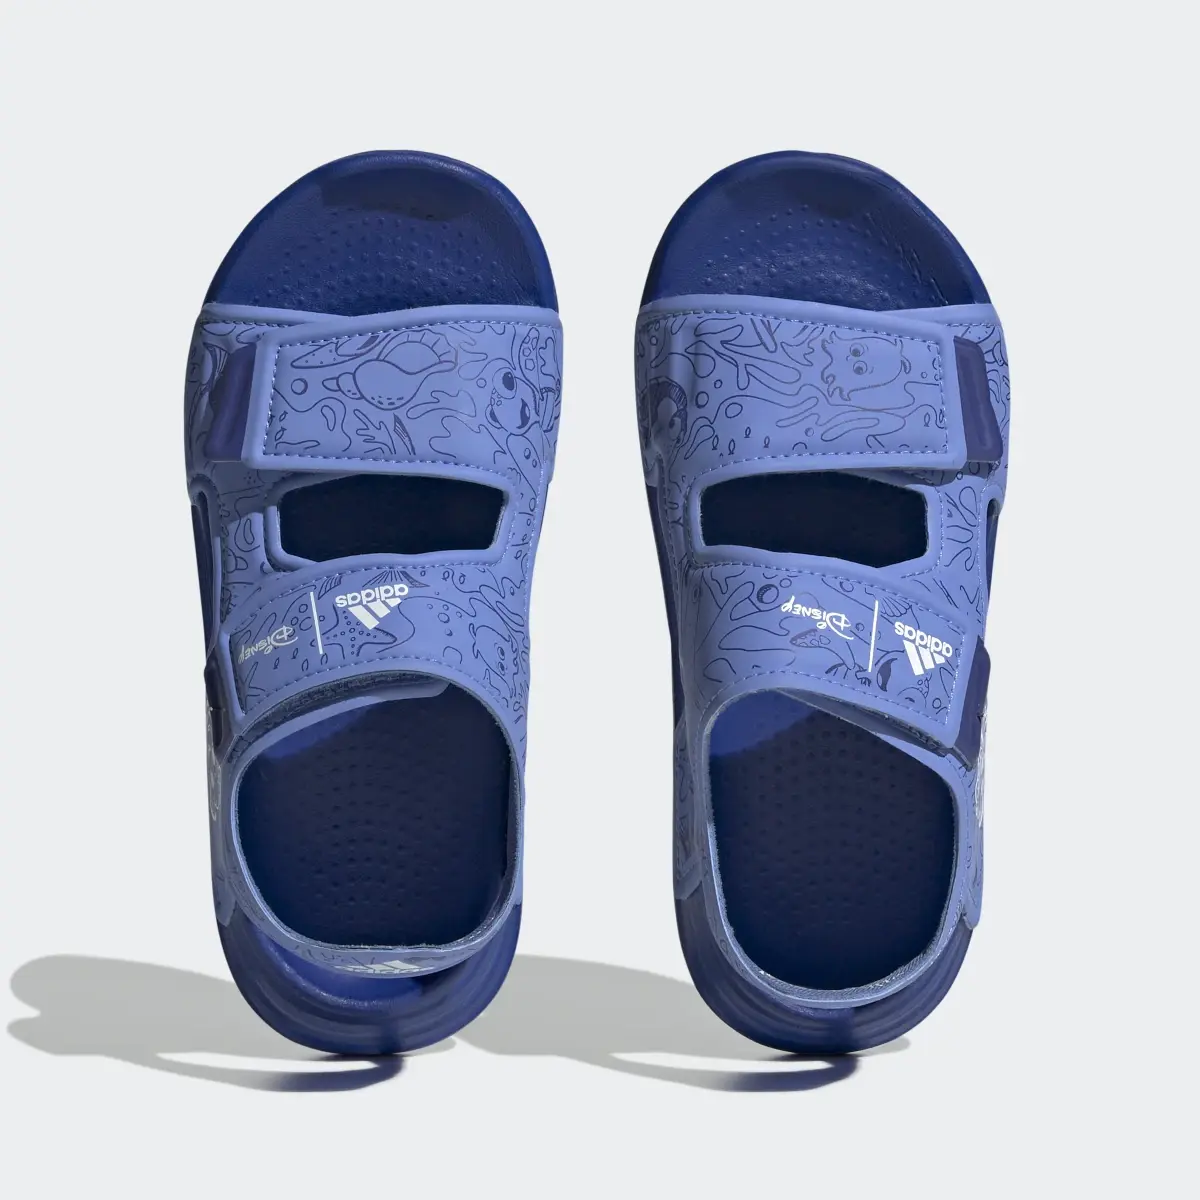 Adidas x Disney AltaSwim Finding Nemo Swim Sandals. 3